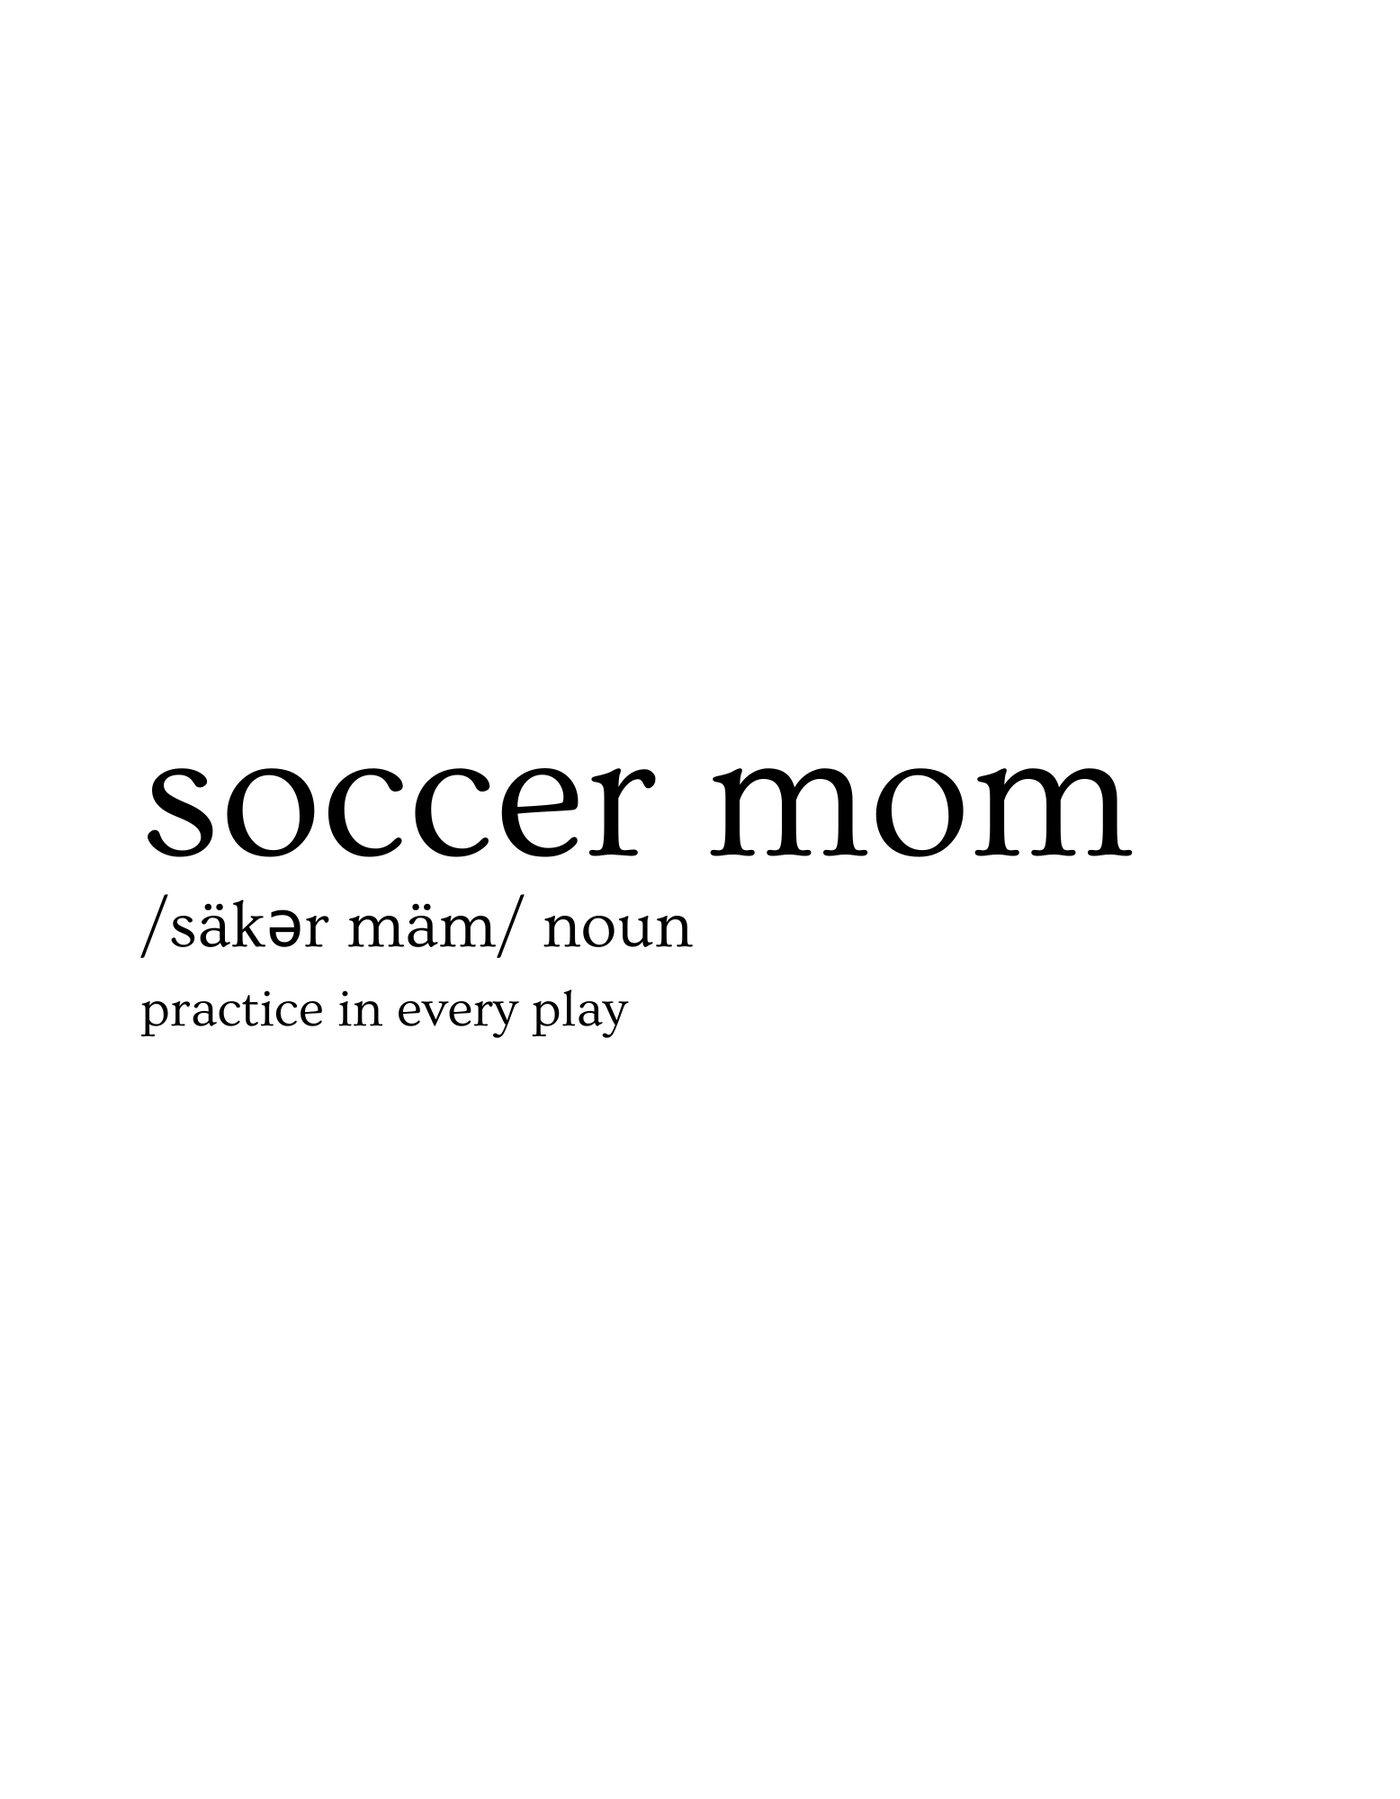 Soccer Mom Definition